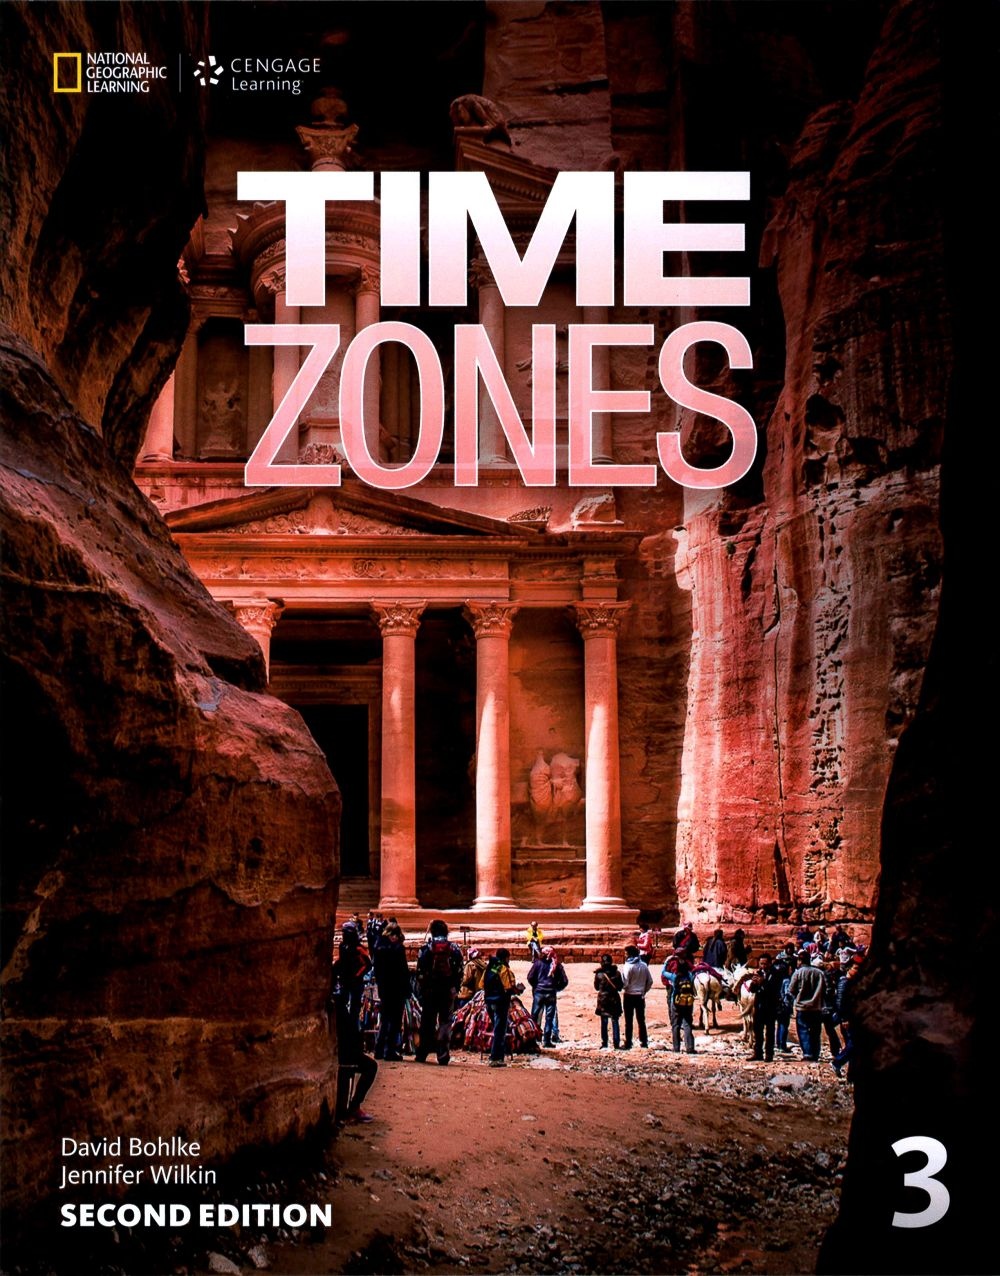 Time Zones 2/e (3) Student Book